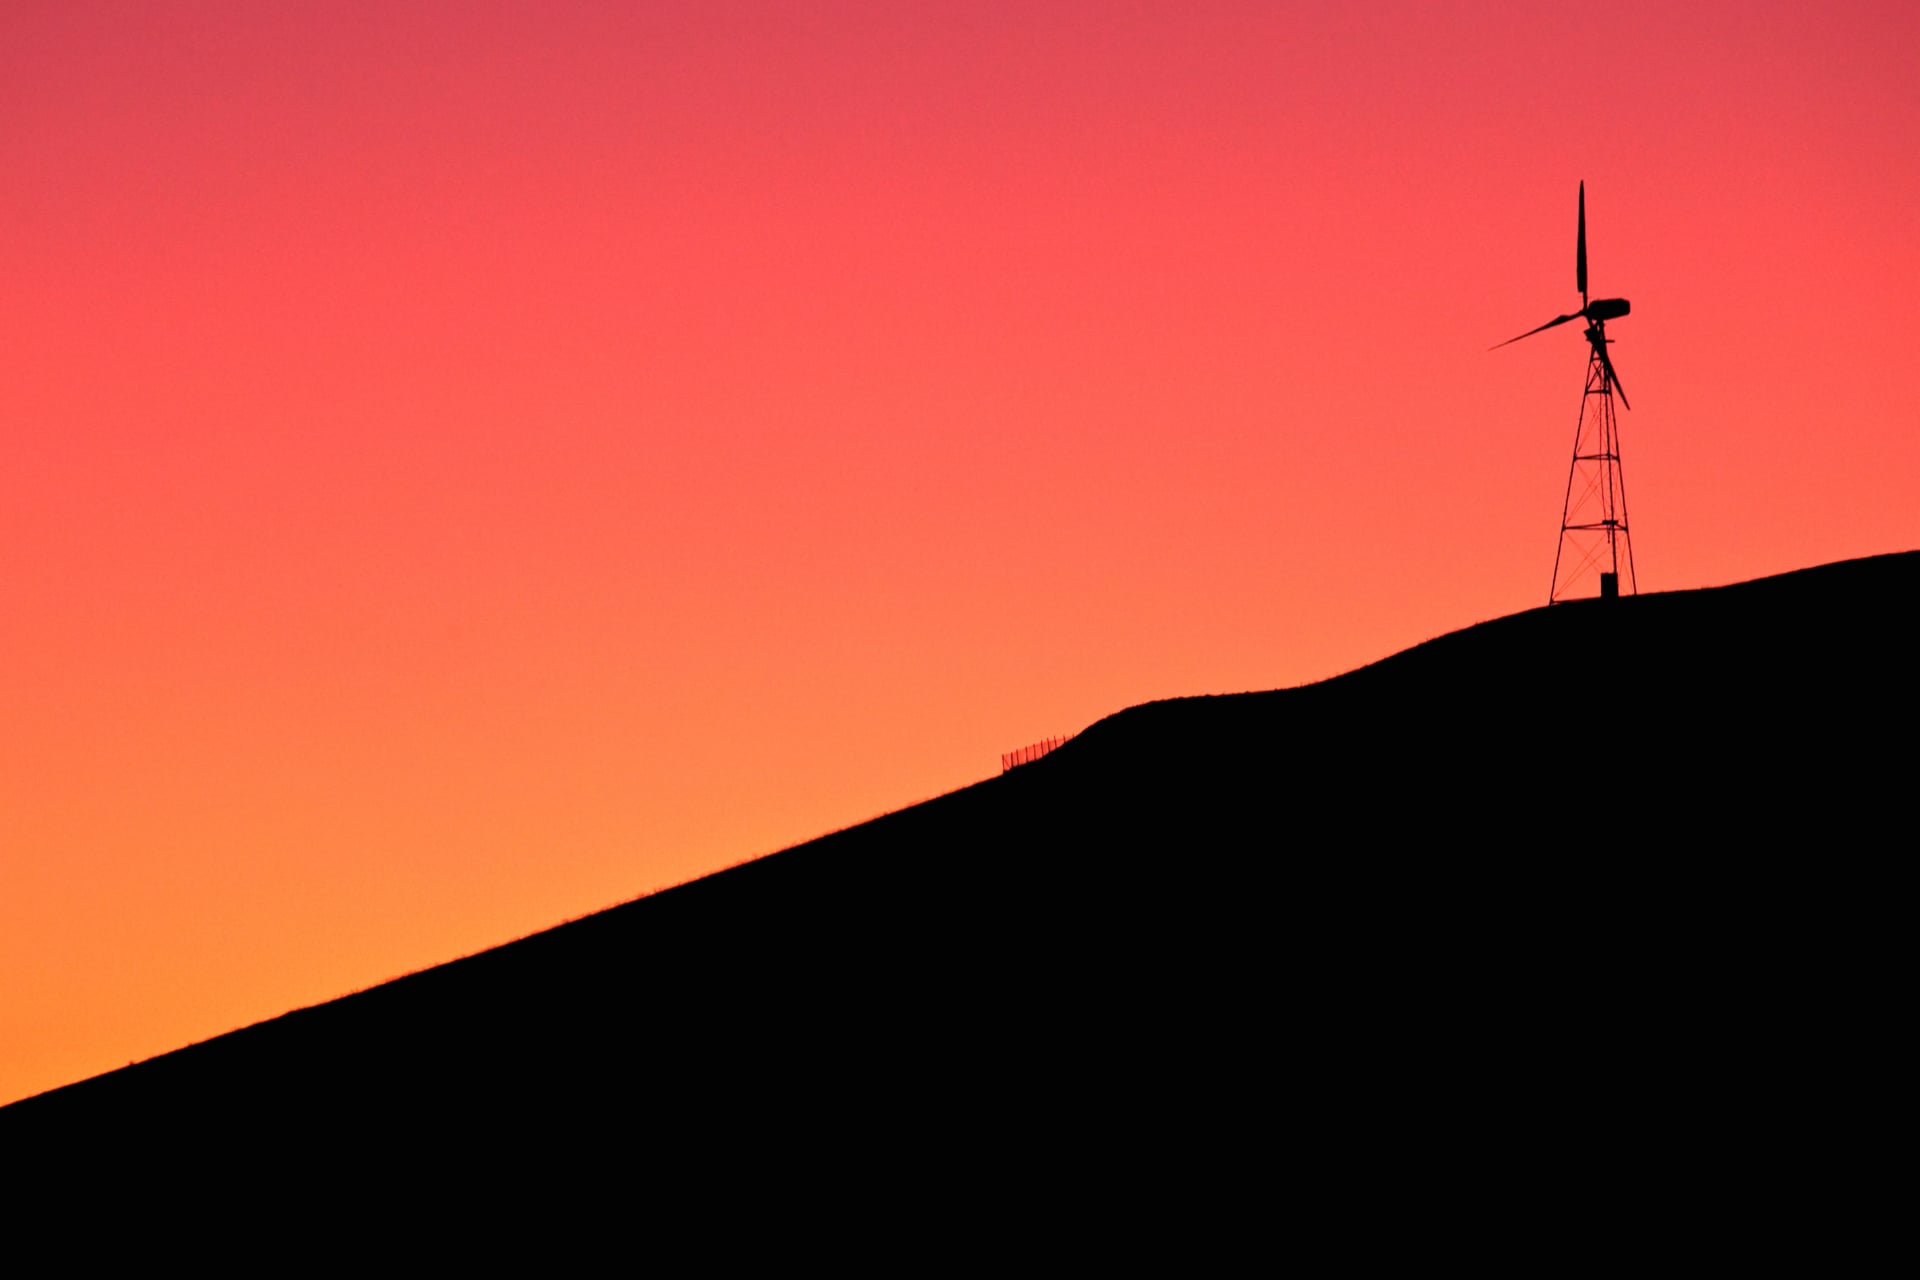 Digital Art Windmill at 640 x 1136 iPhone 5 size wallpapers HD quality